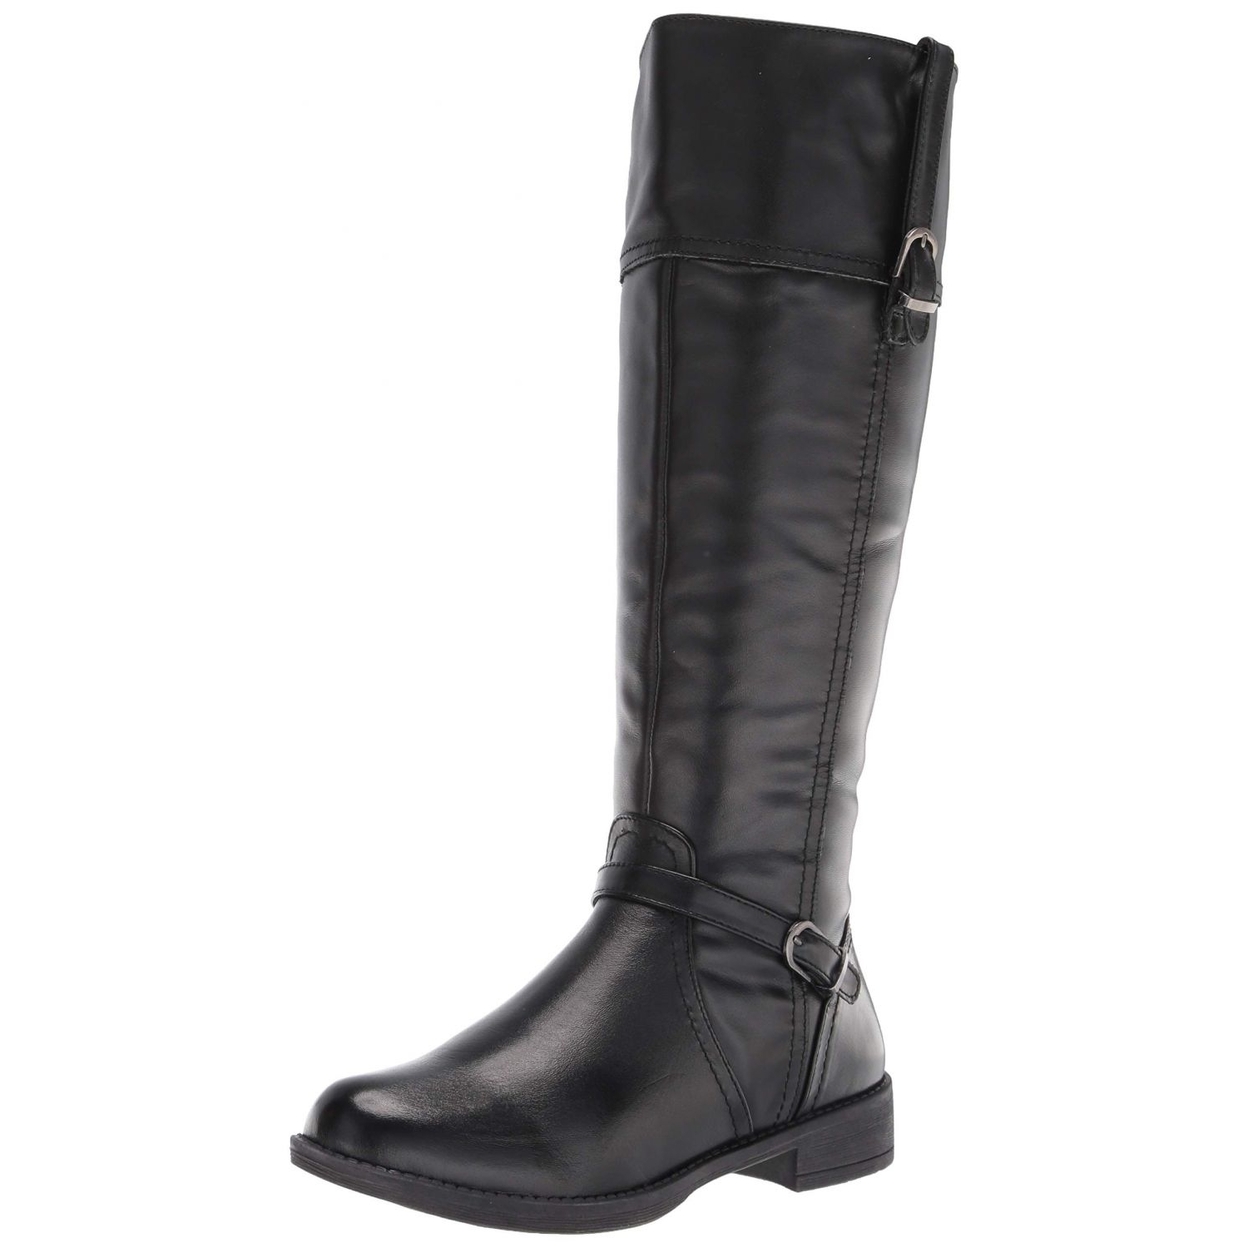 Propet Womens Tasha Zippered Casual Boots Knee High Low Heel 1-2 - Black BROWN - BROWN, 6.5 X-Wide